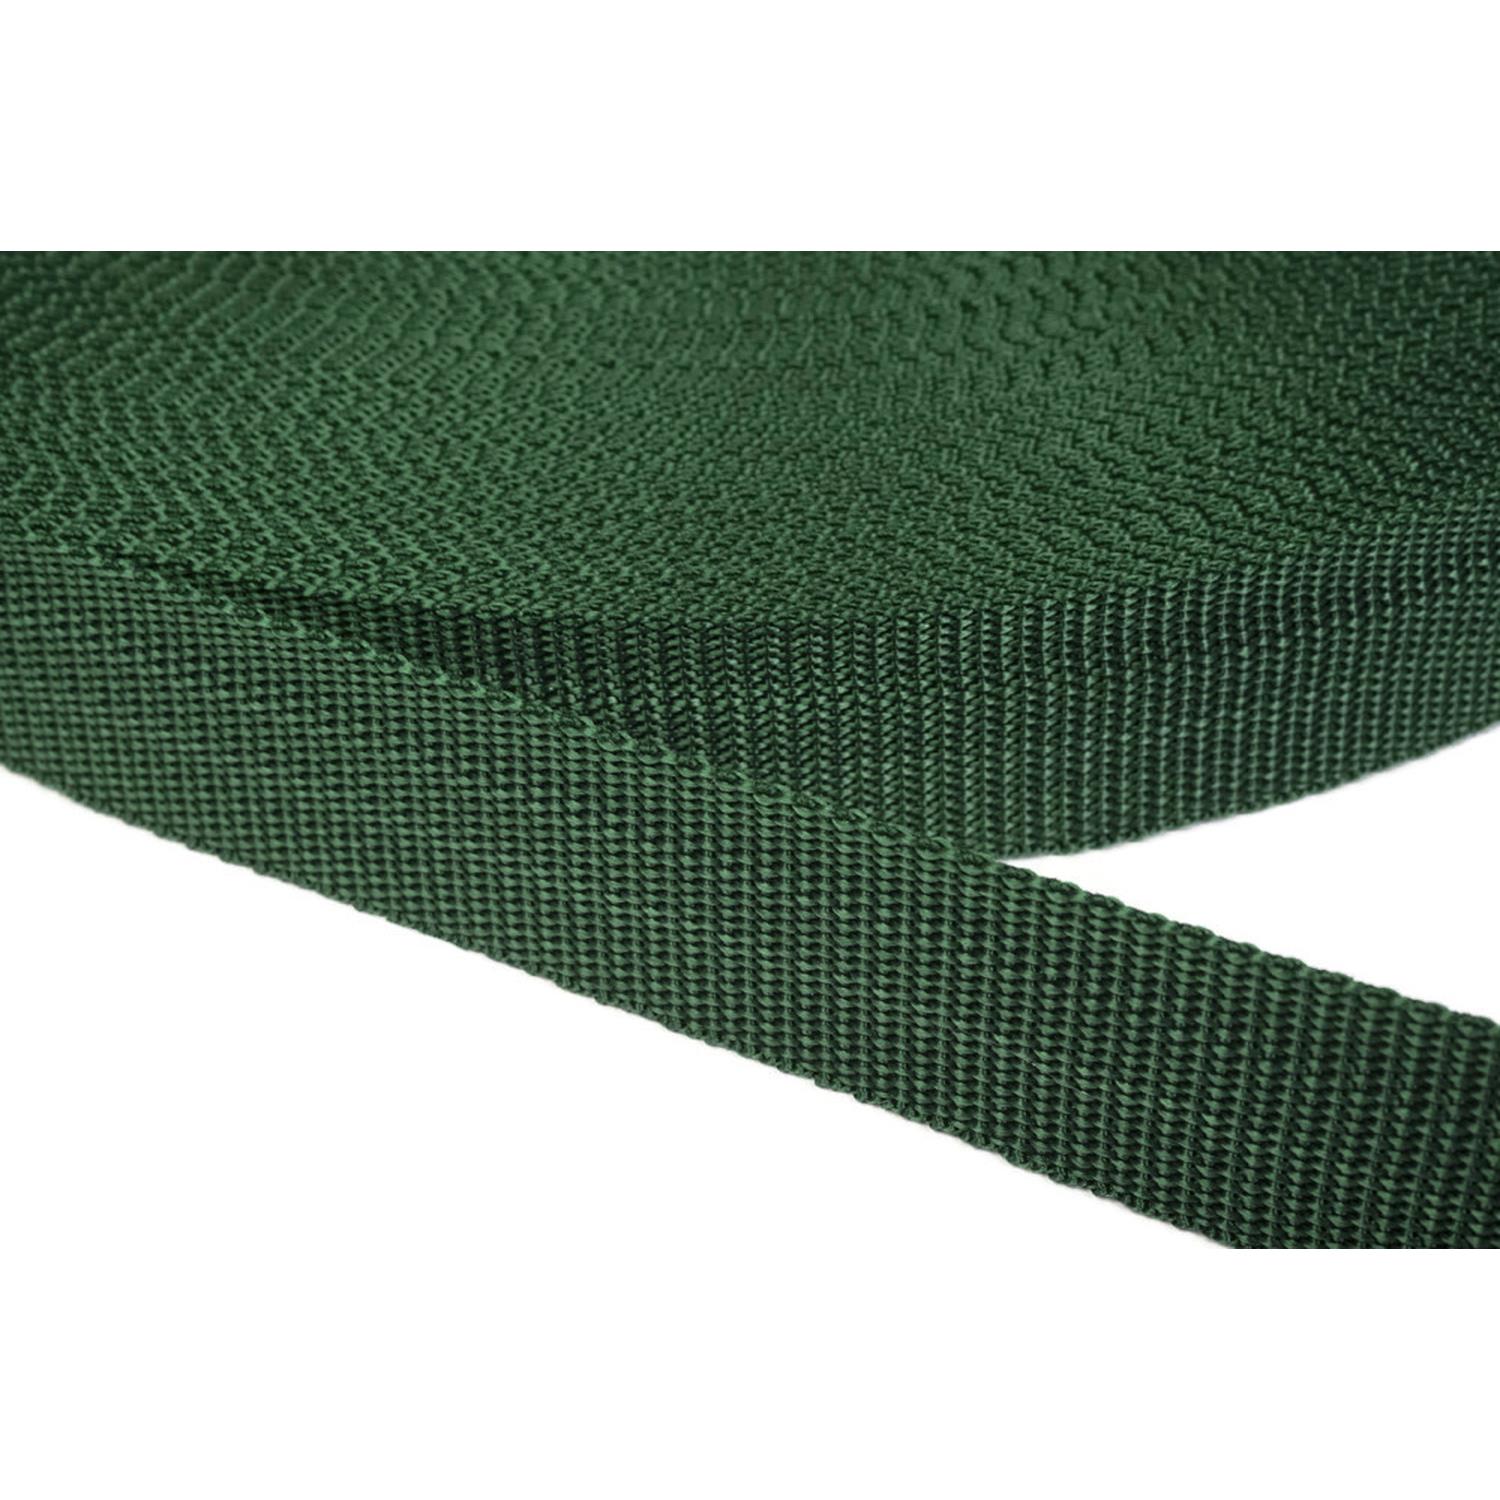 Gurtband 50mm breit aus Polypropylen in 41 Farben 35 - dunkelgrün 6 Meter